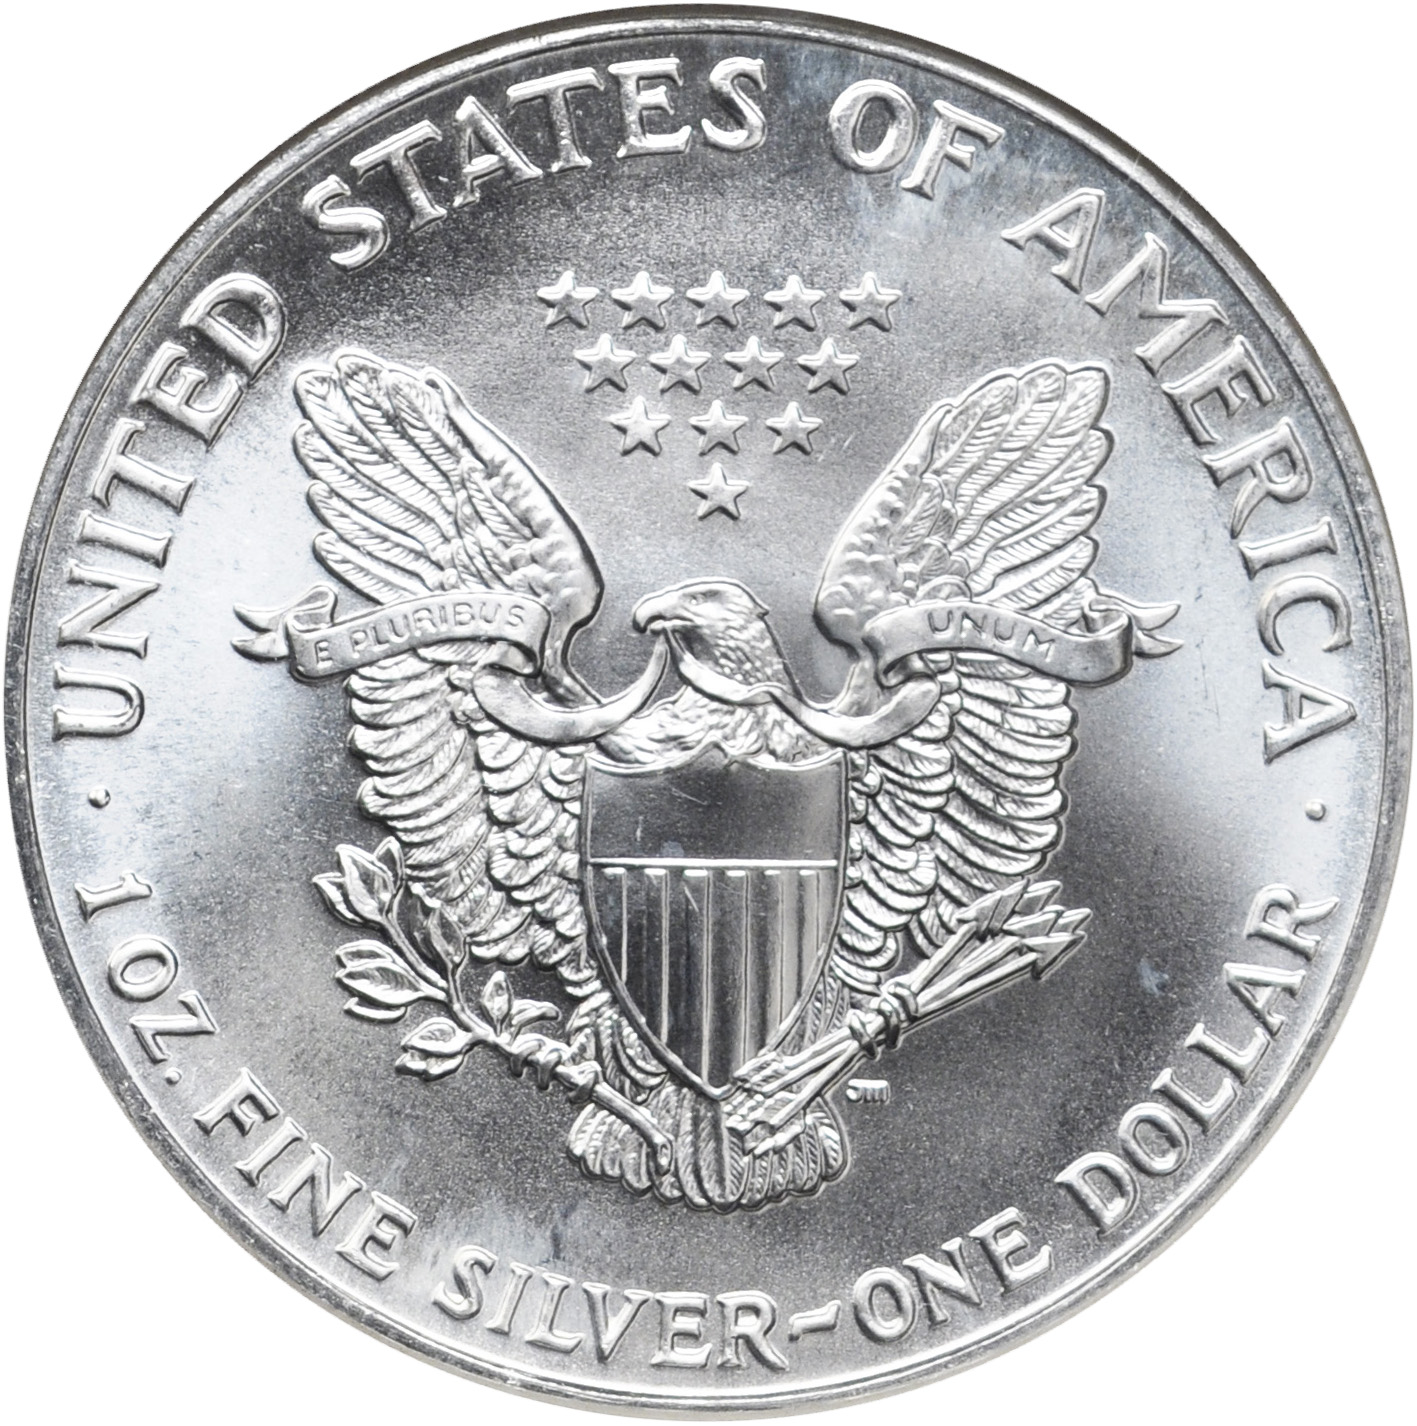 Value of 1990 $1 Silver Coin | American Silver Eagle Coin